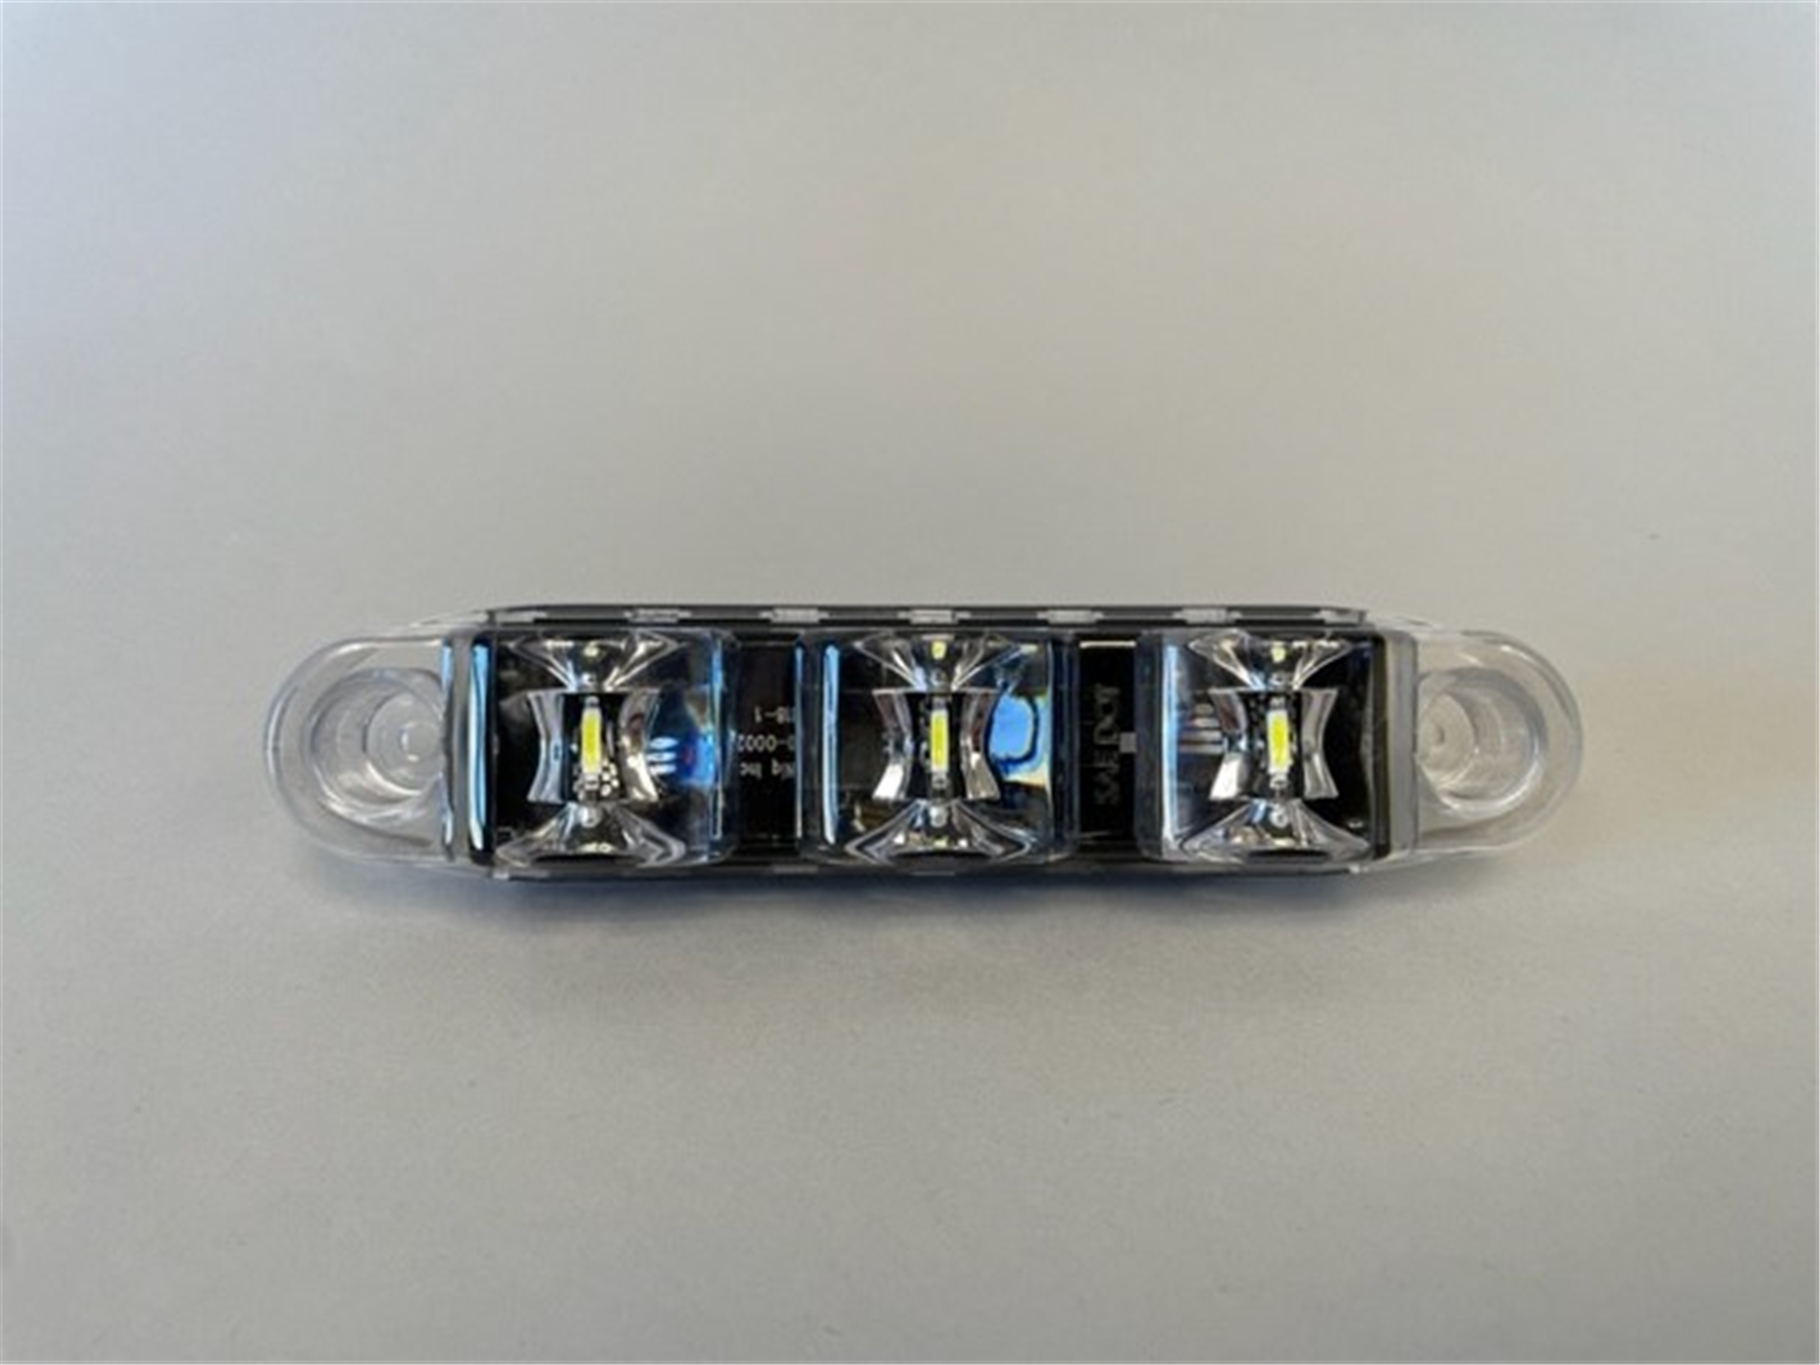 LED, 12V LOADING LIGHT, E10, 6.5", GROUND/PUMP PANEL LIGHT, NO BRACKET